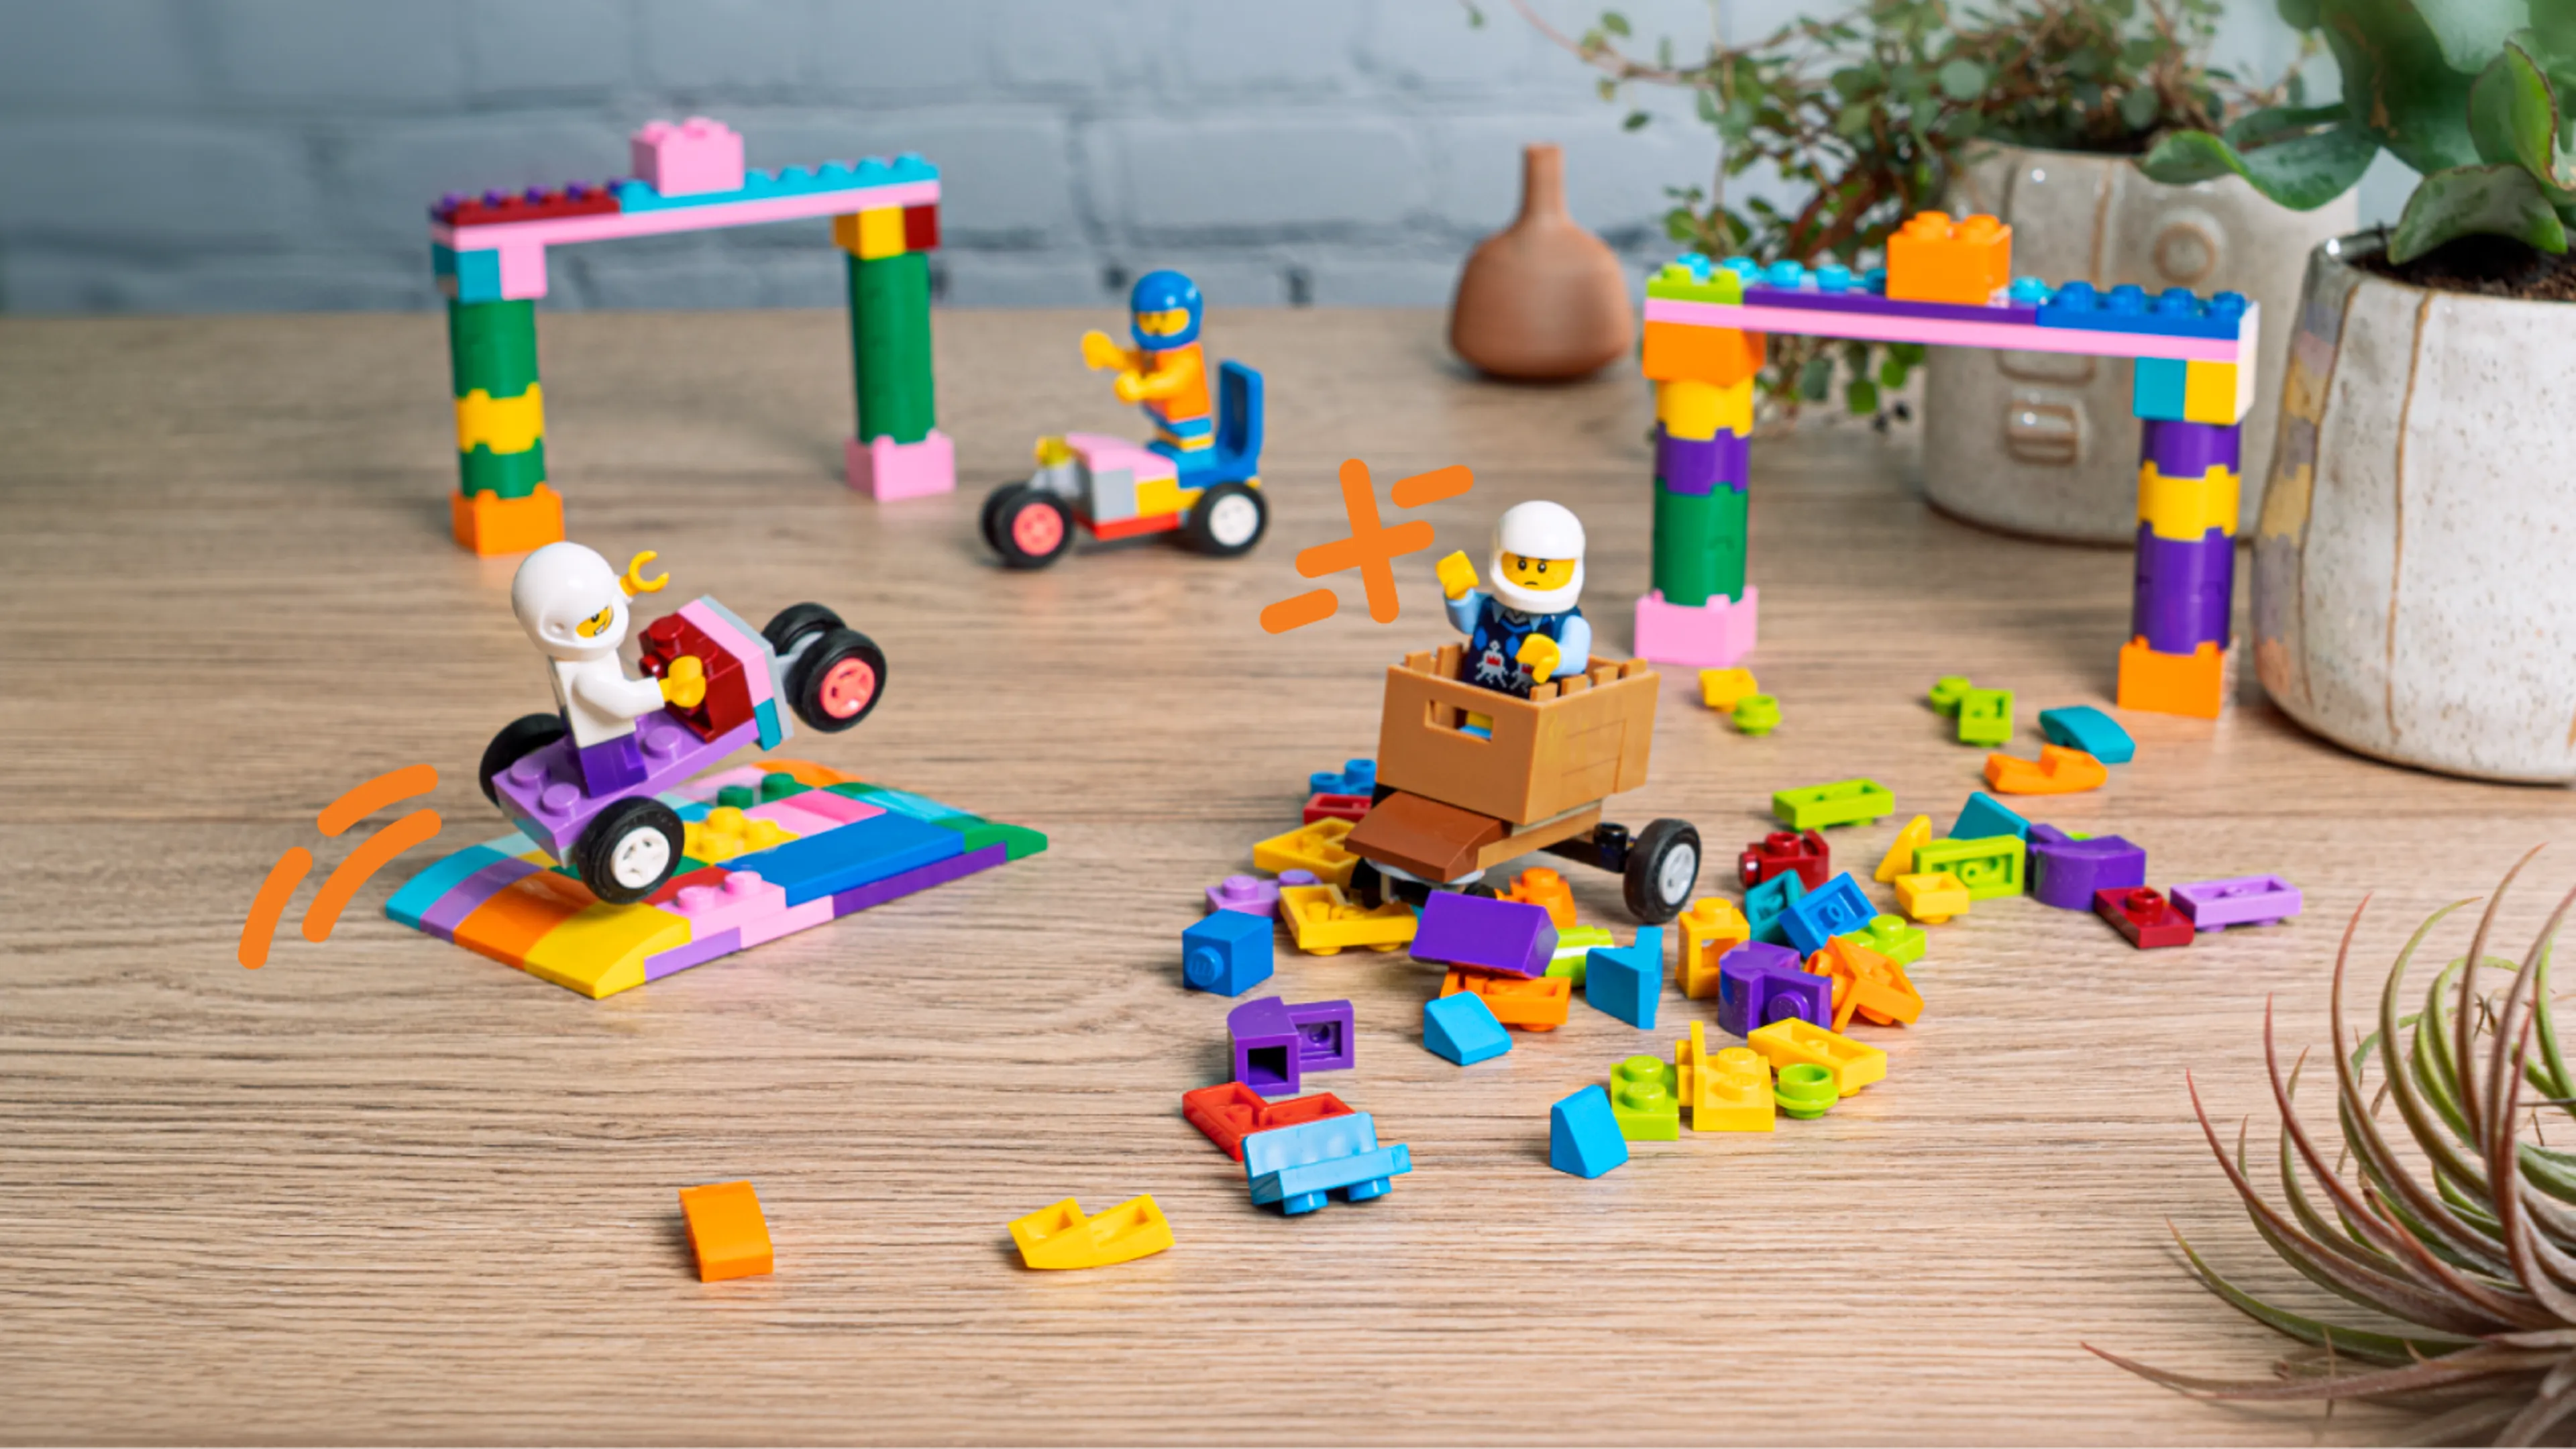 Minifigures, LEGO soapbox cars, fences and a pile of bricks